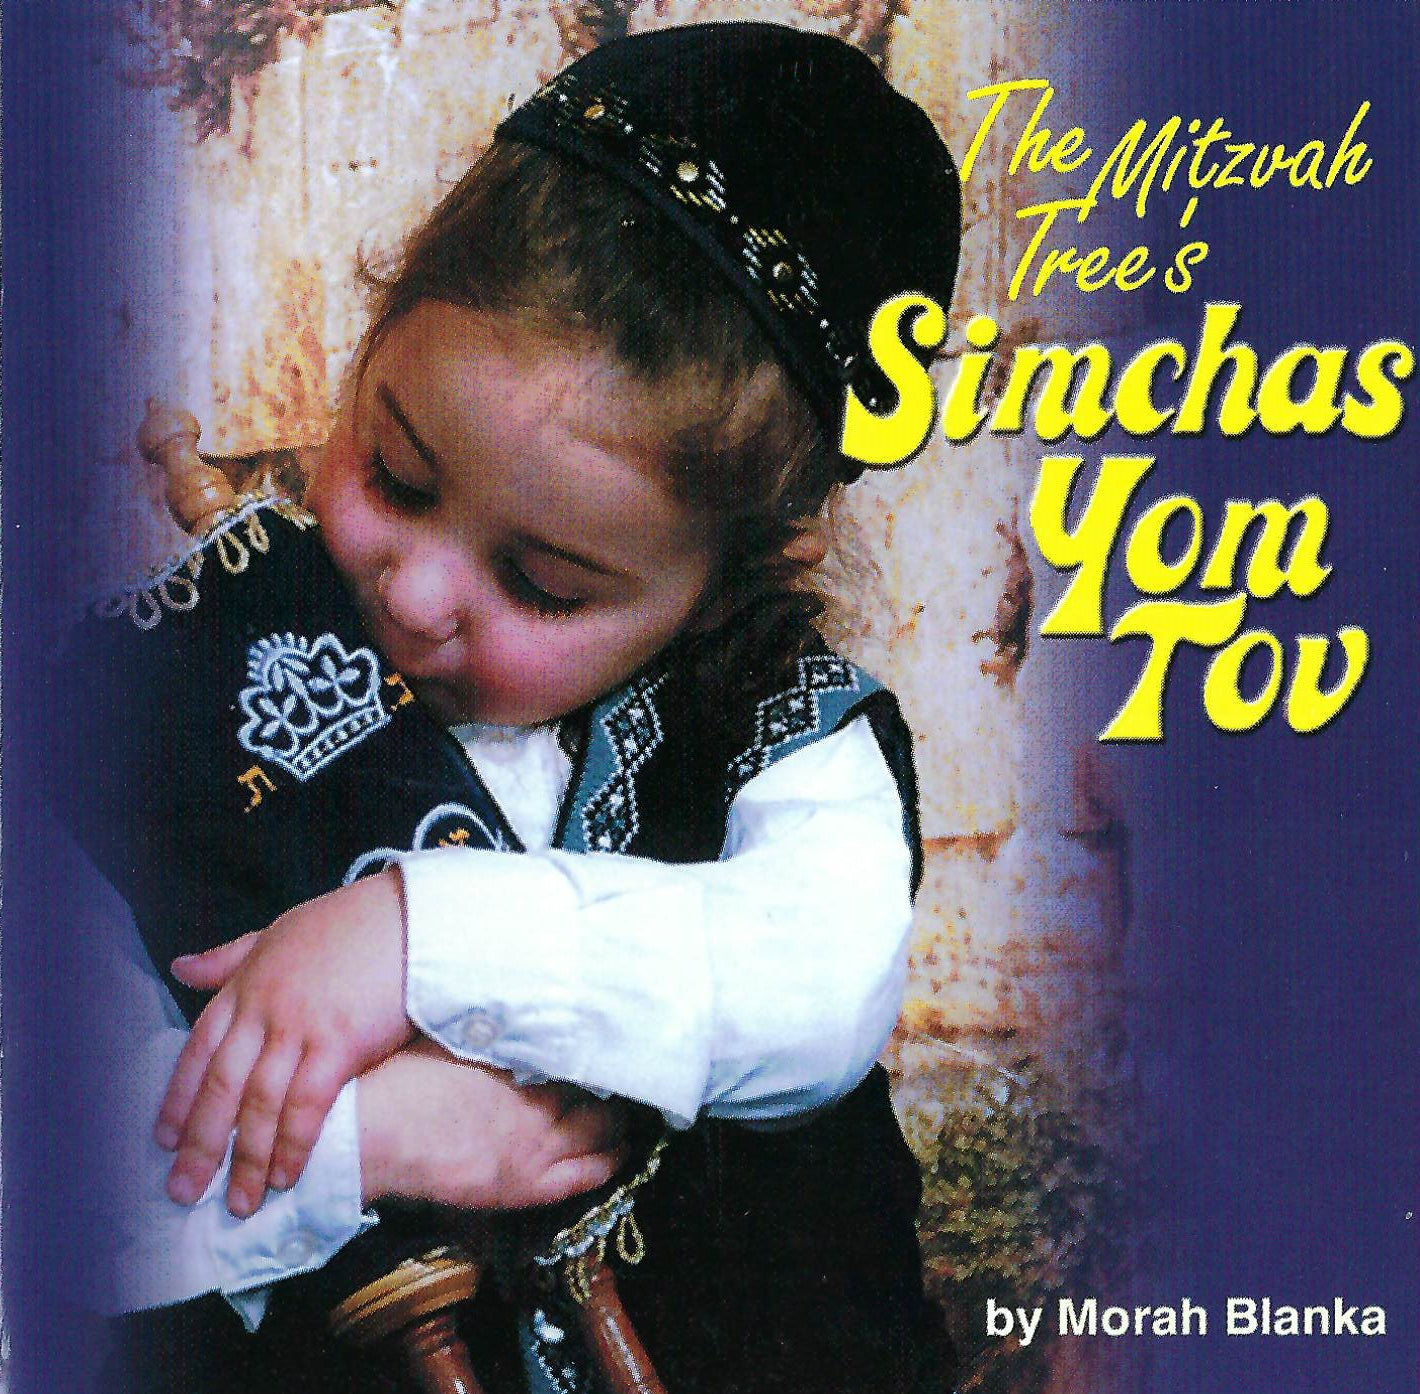 The Mitzvah Tree - Simchas Yom Tov (Blue)